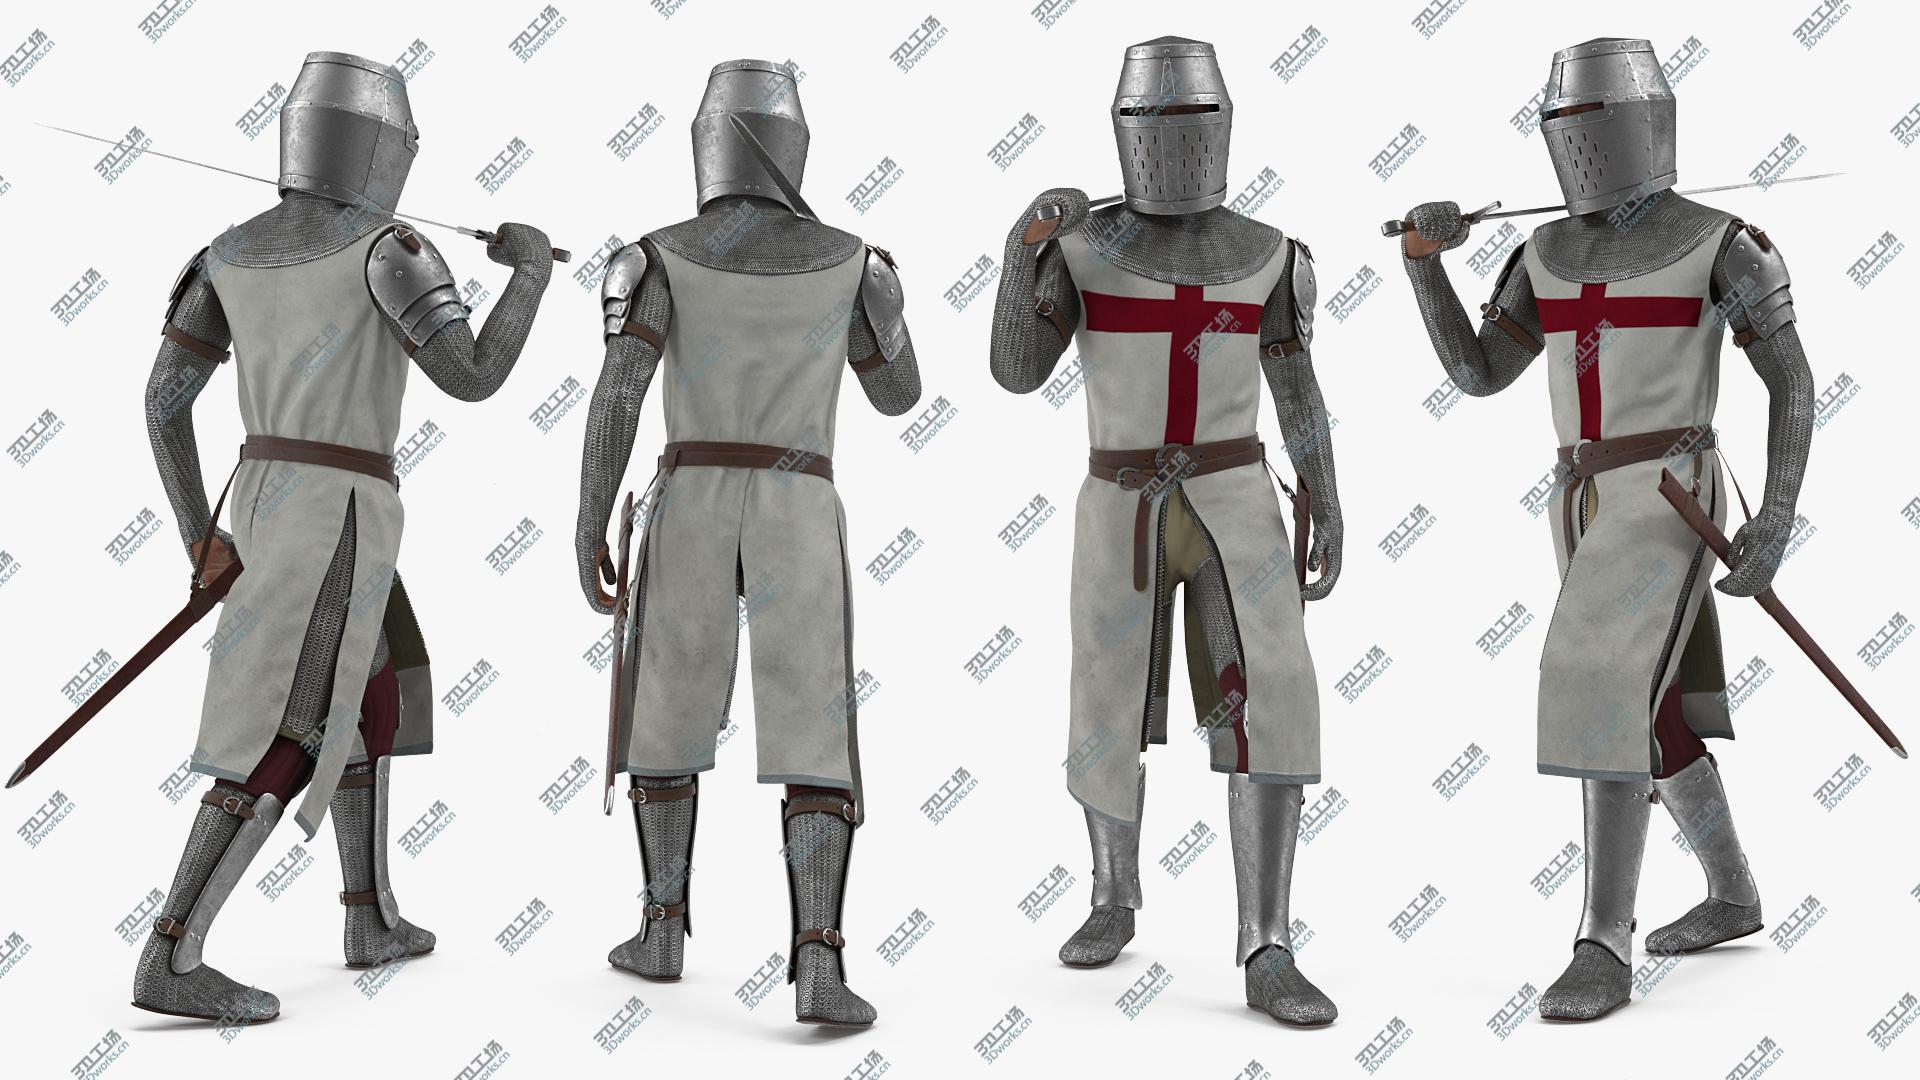 images/goods_img/202104093/Knight Templar Walking Pose 3D model/1.jpg